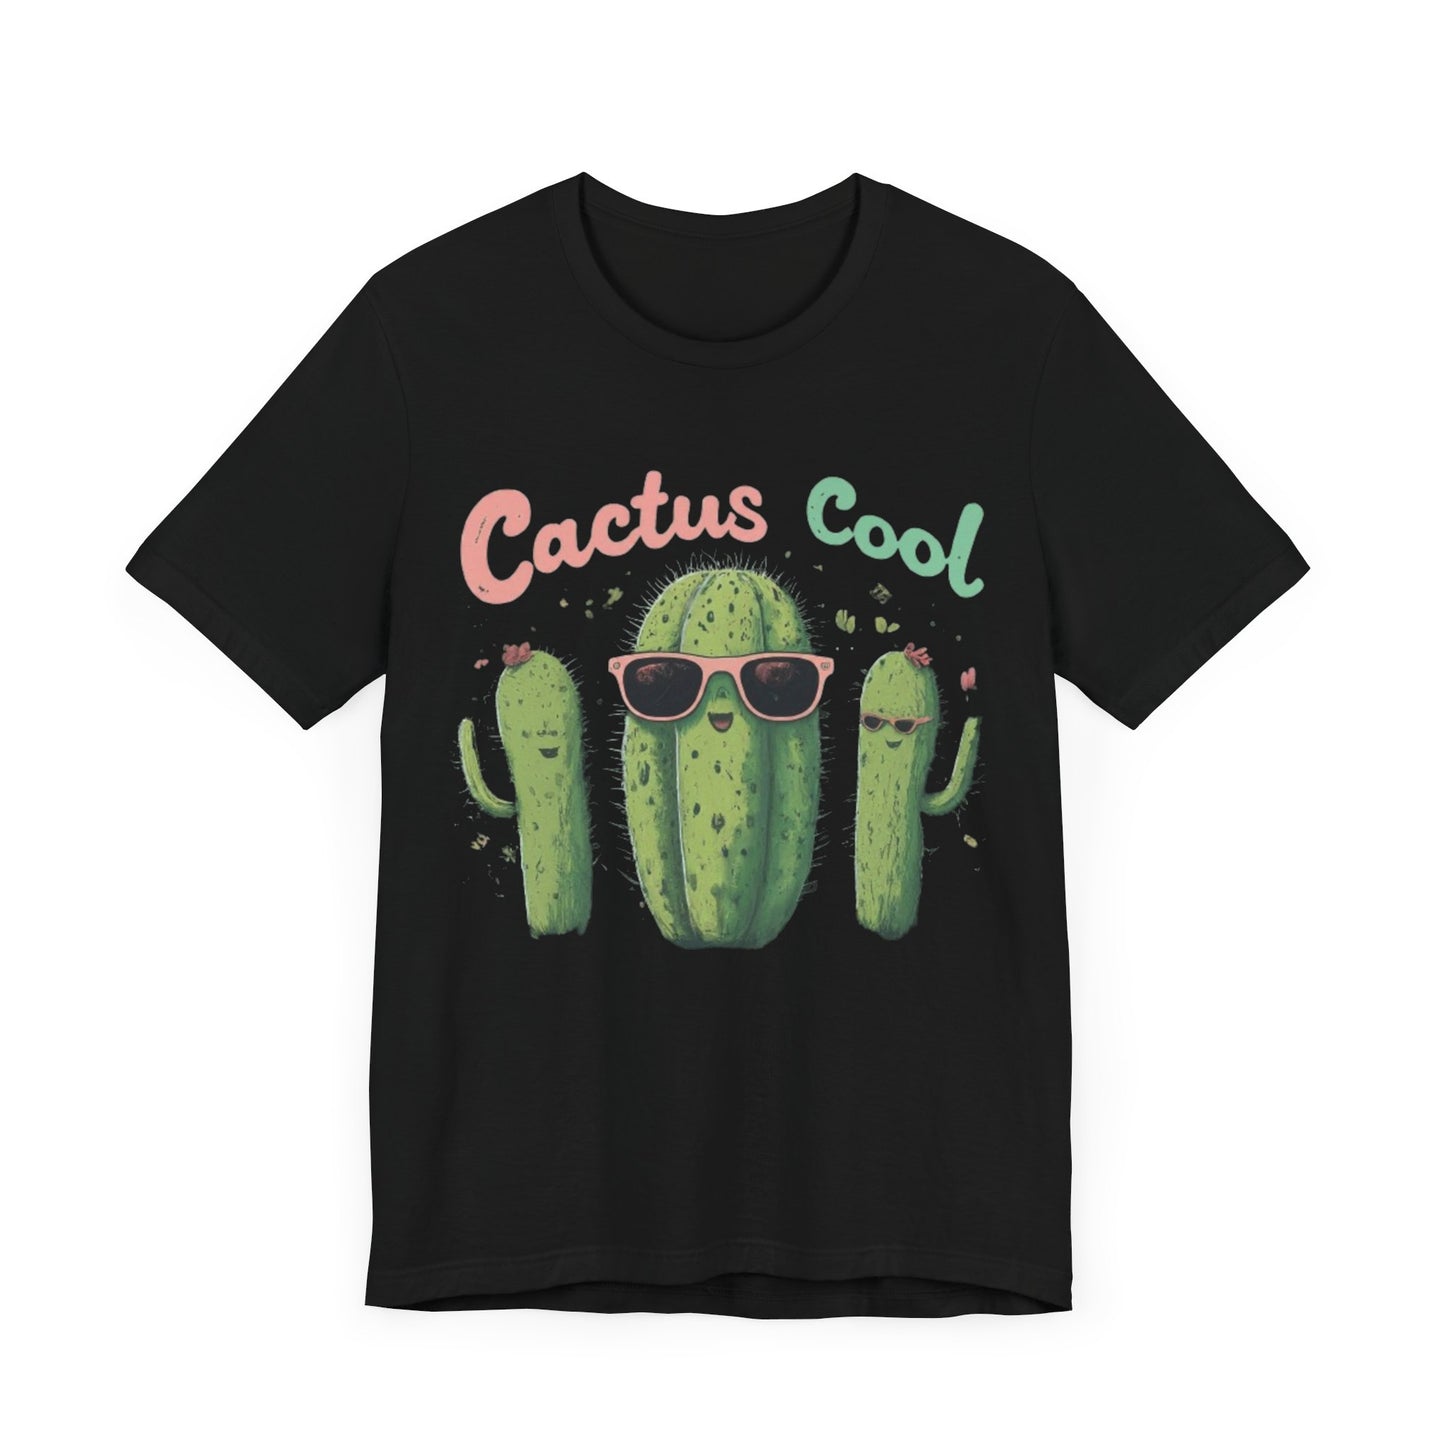 Cactus Cool Tee